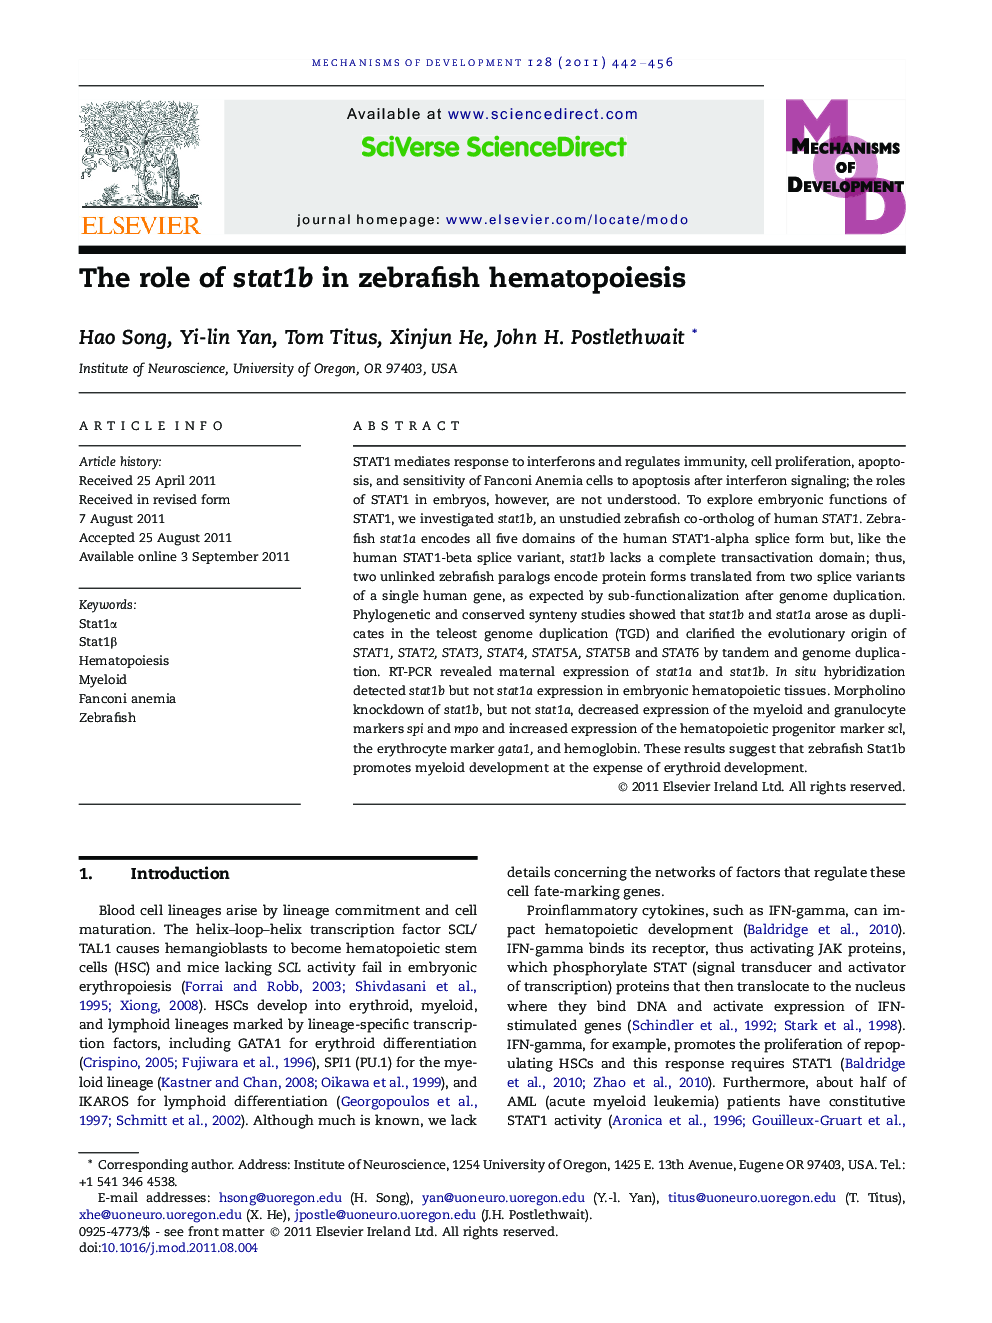 The role of stat1b in zebrafish hematopoiesis